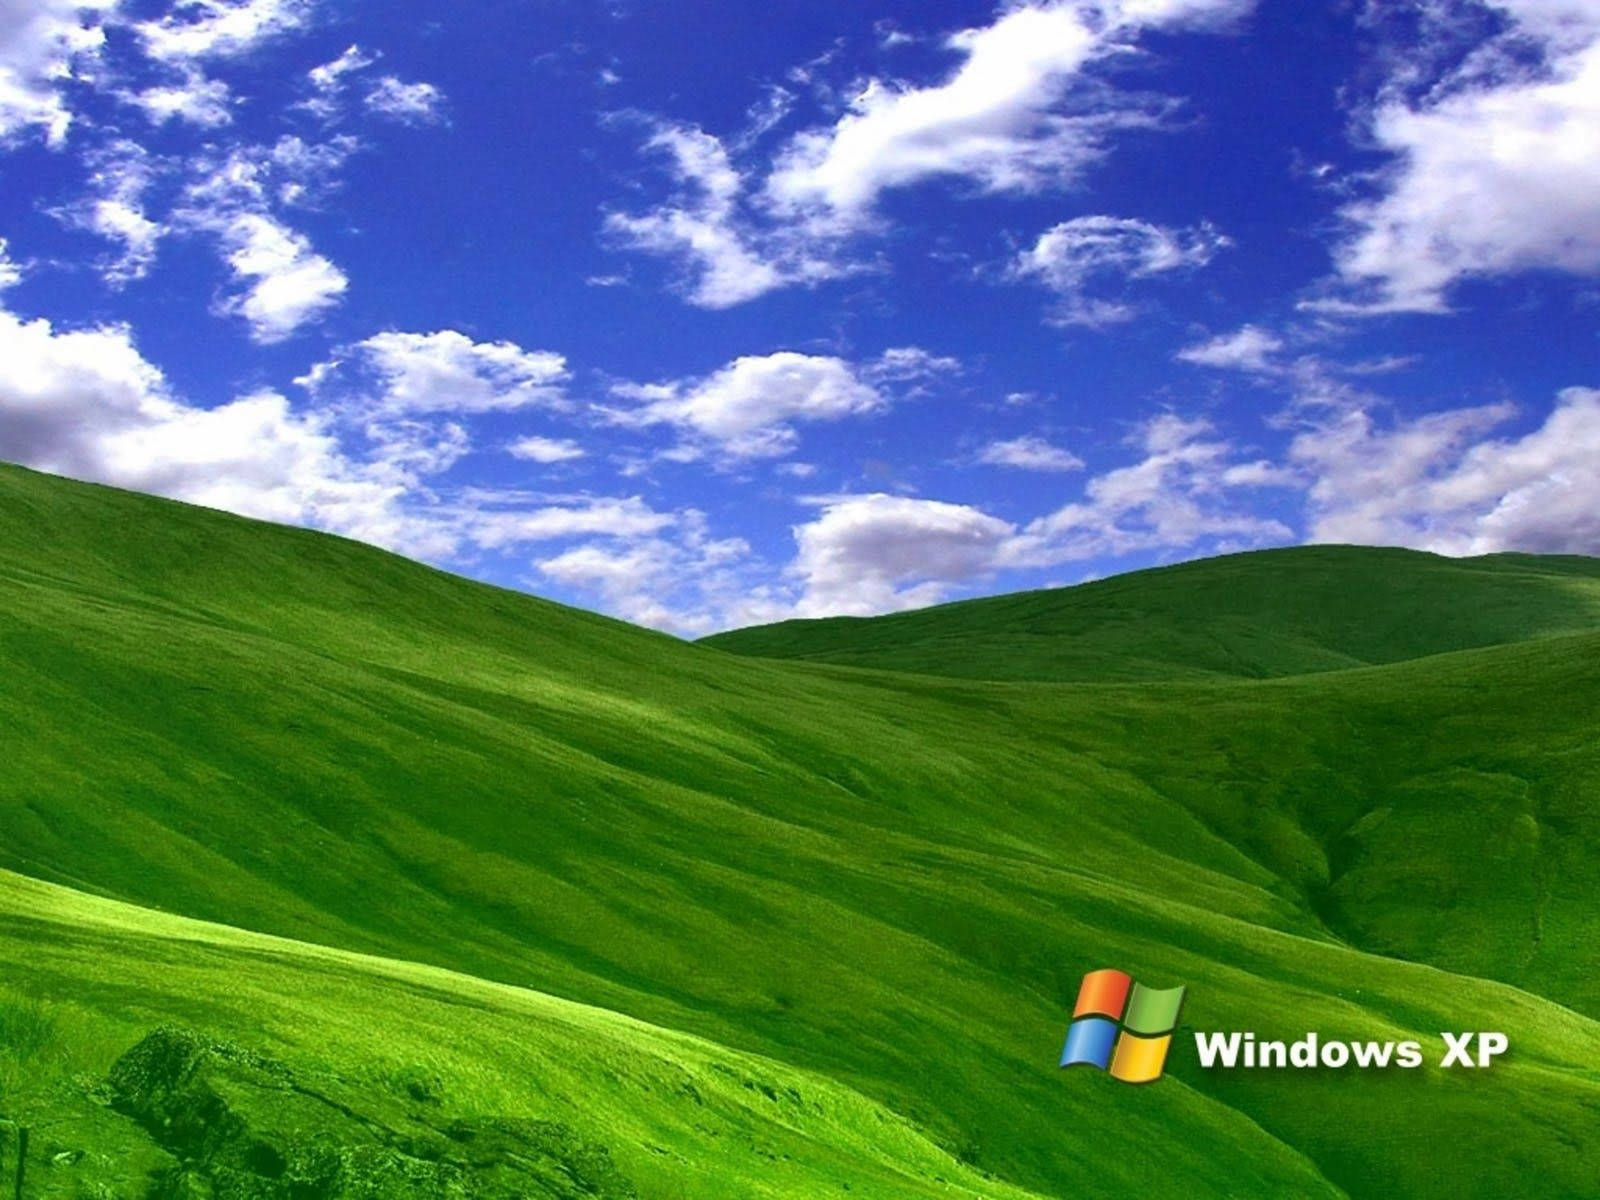 Free Windows Xp Wallpaper Downloads, [100+] Windows Xp Wallpapers for FREE  